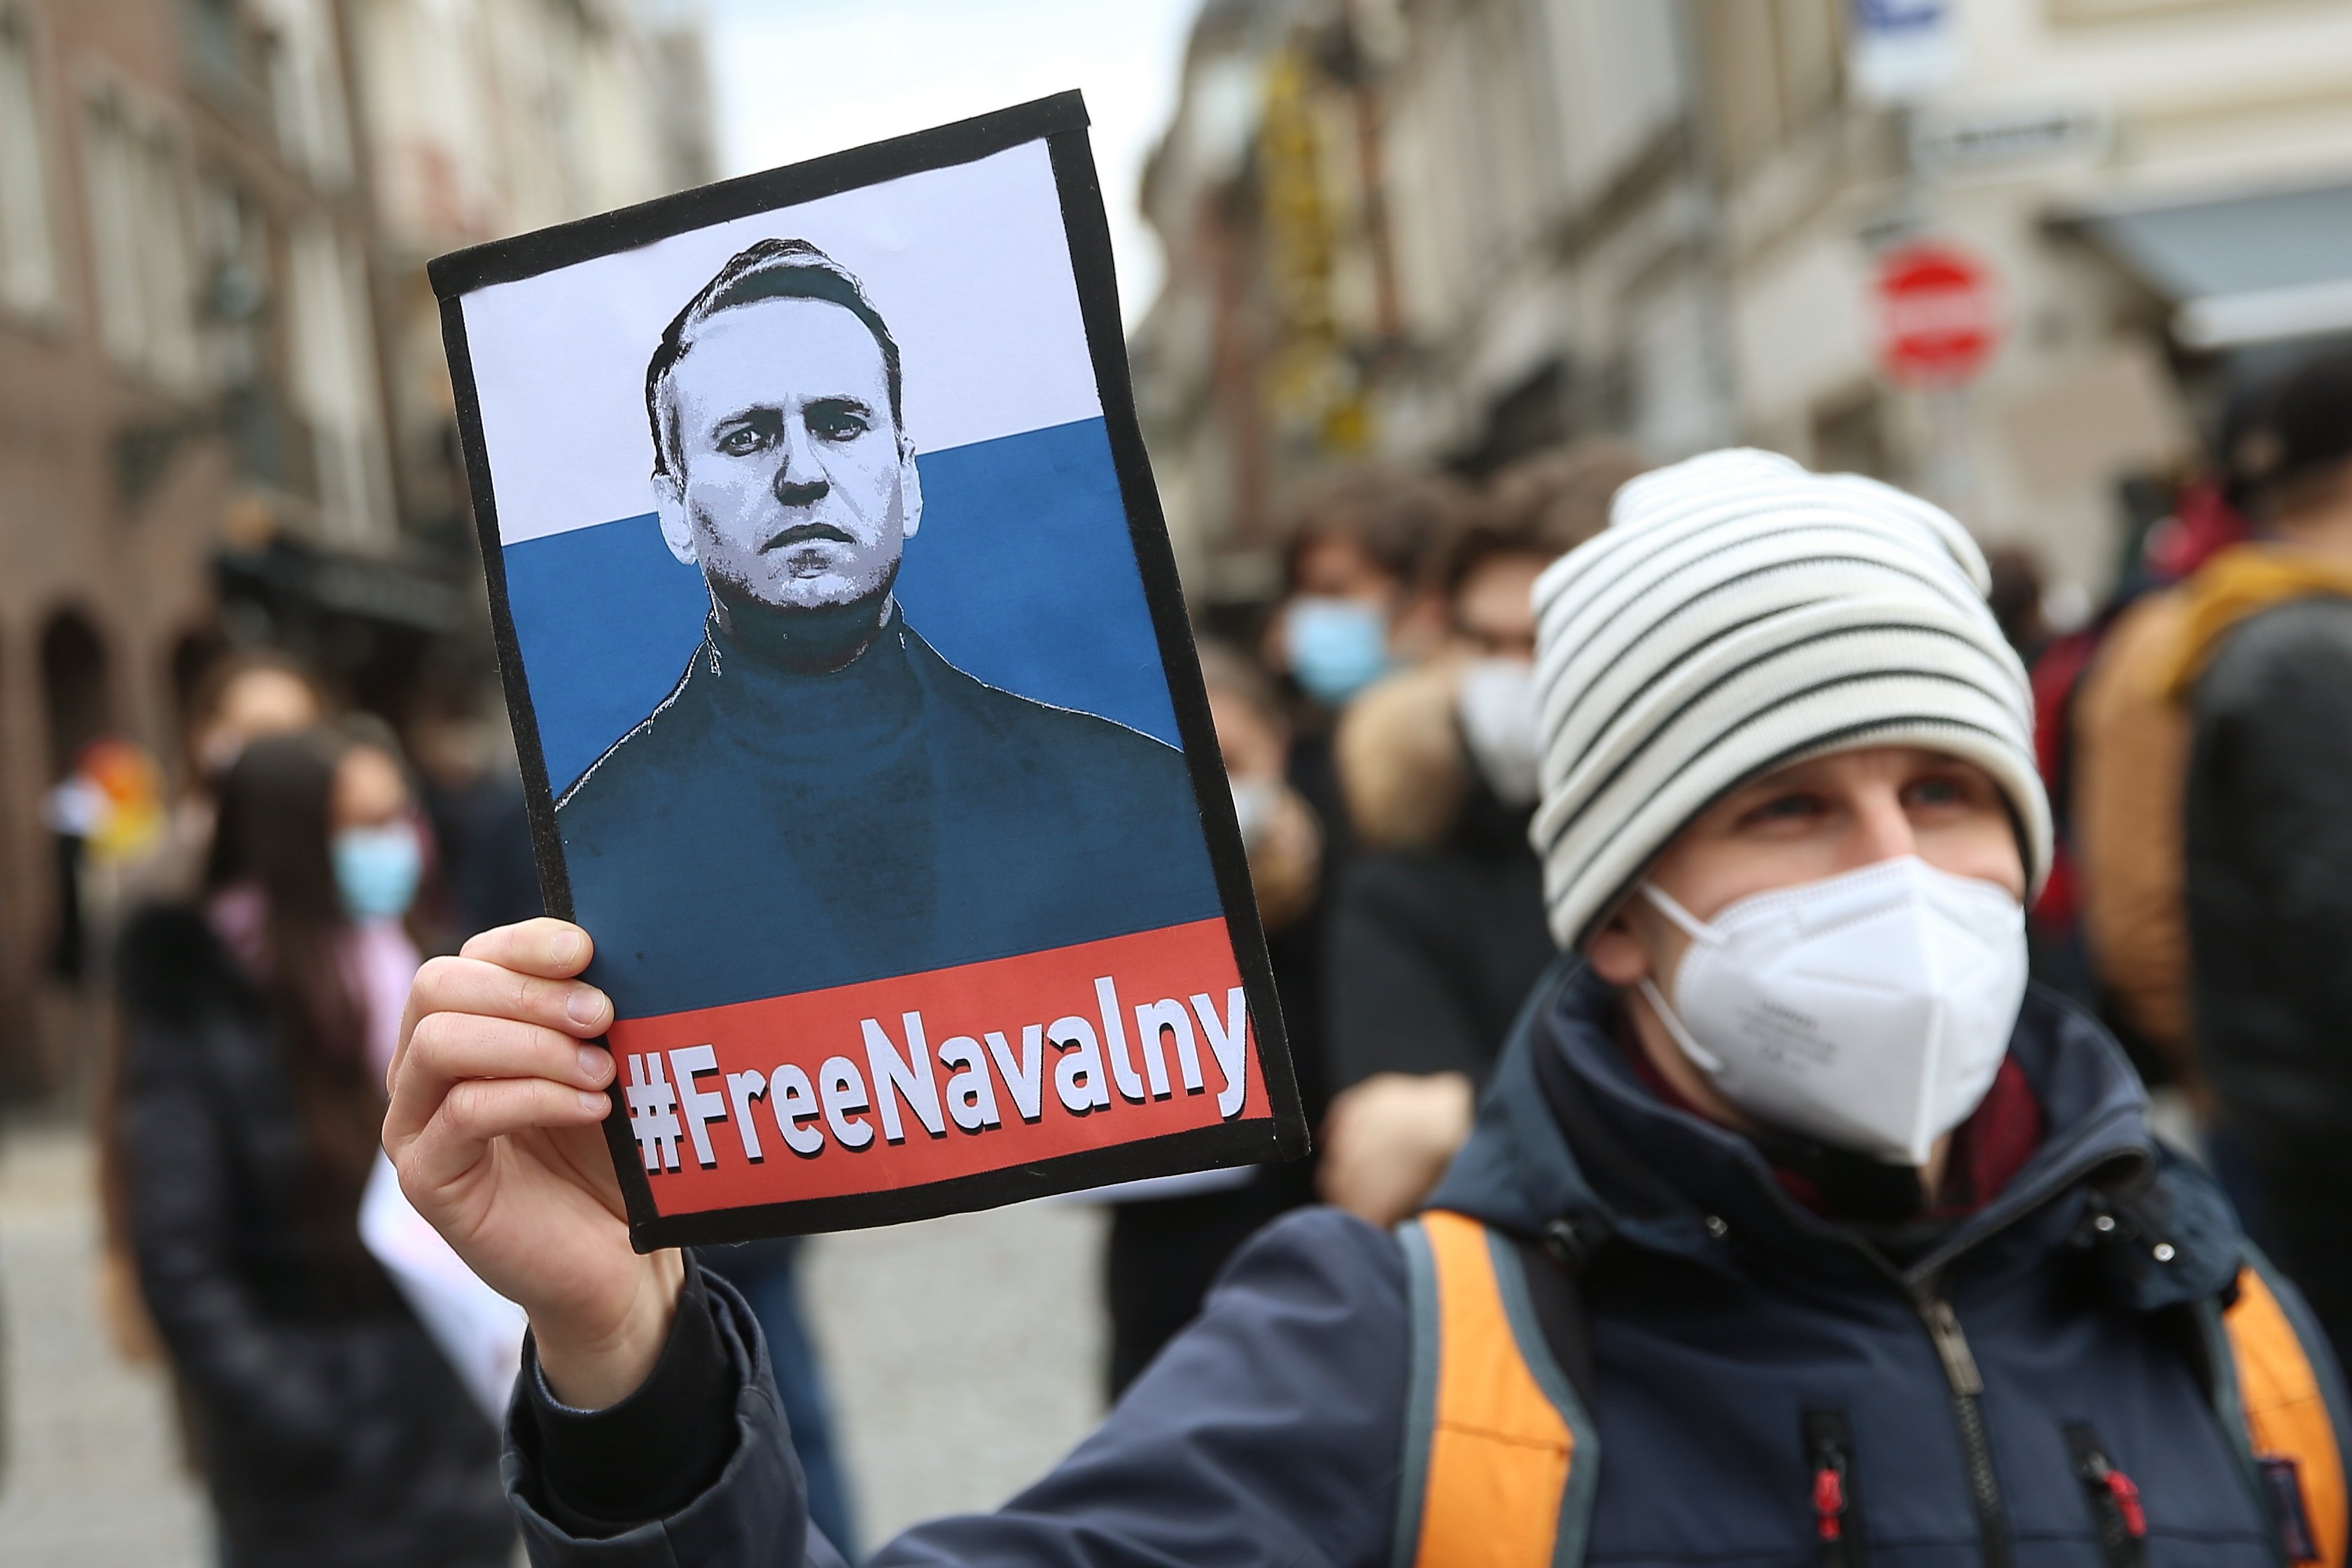 manifestacio russia aleksei navalni navalny opositor rus David Young / Europa Press